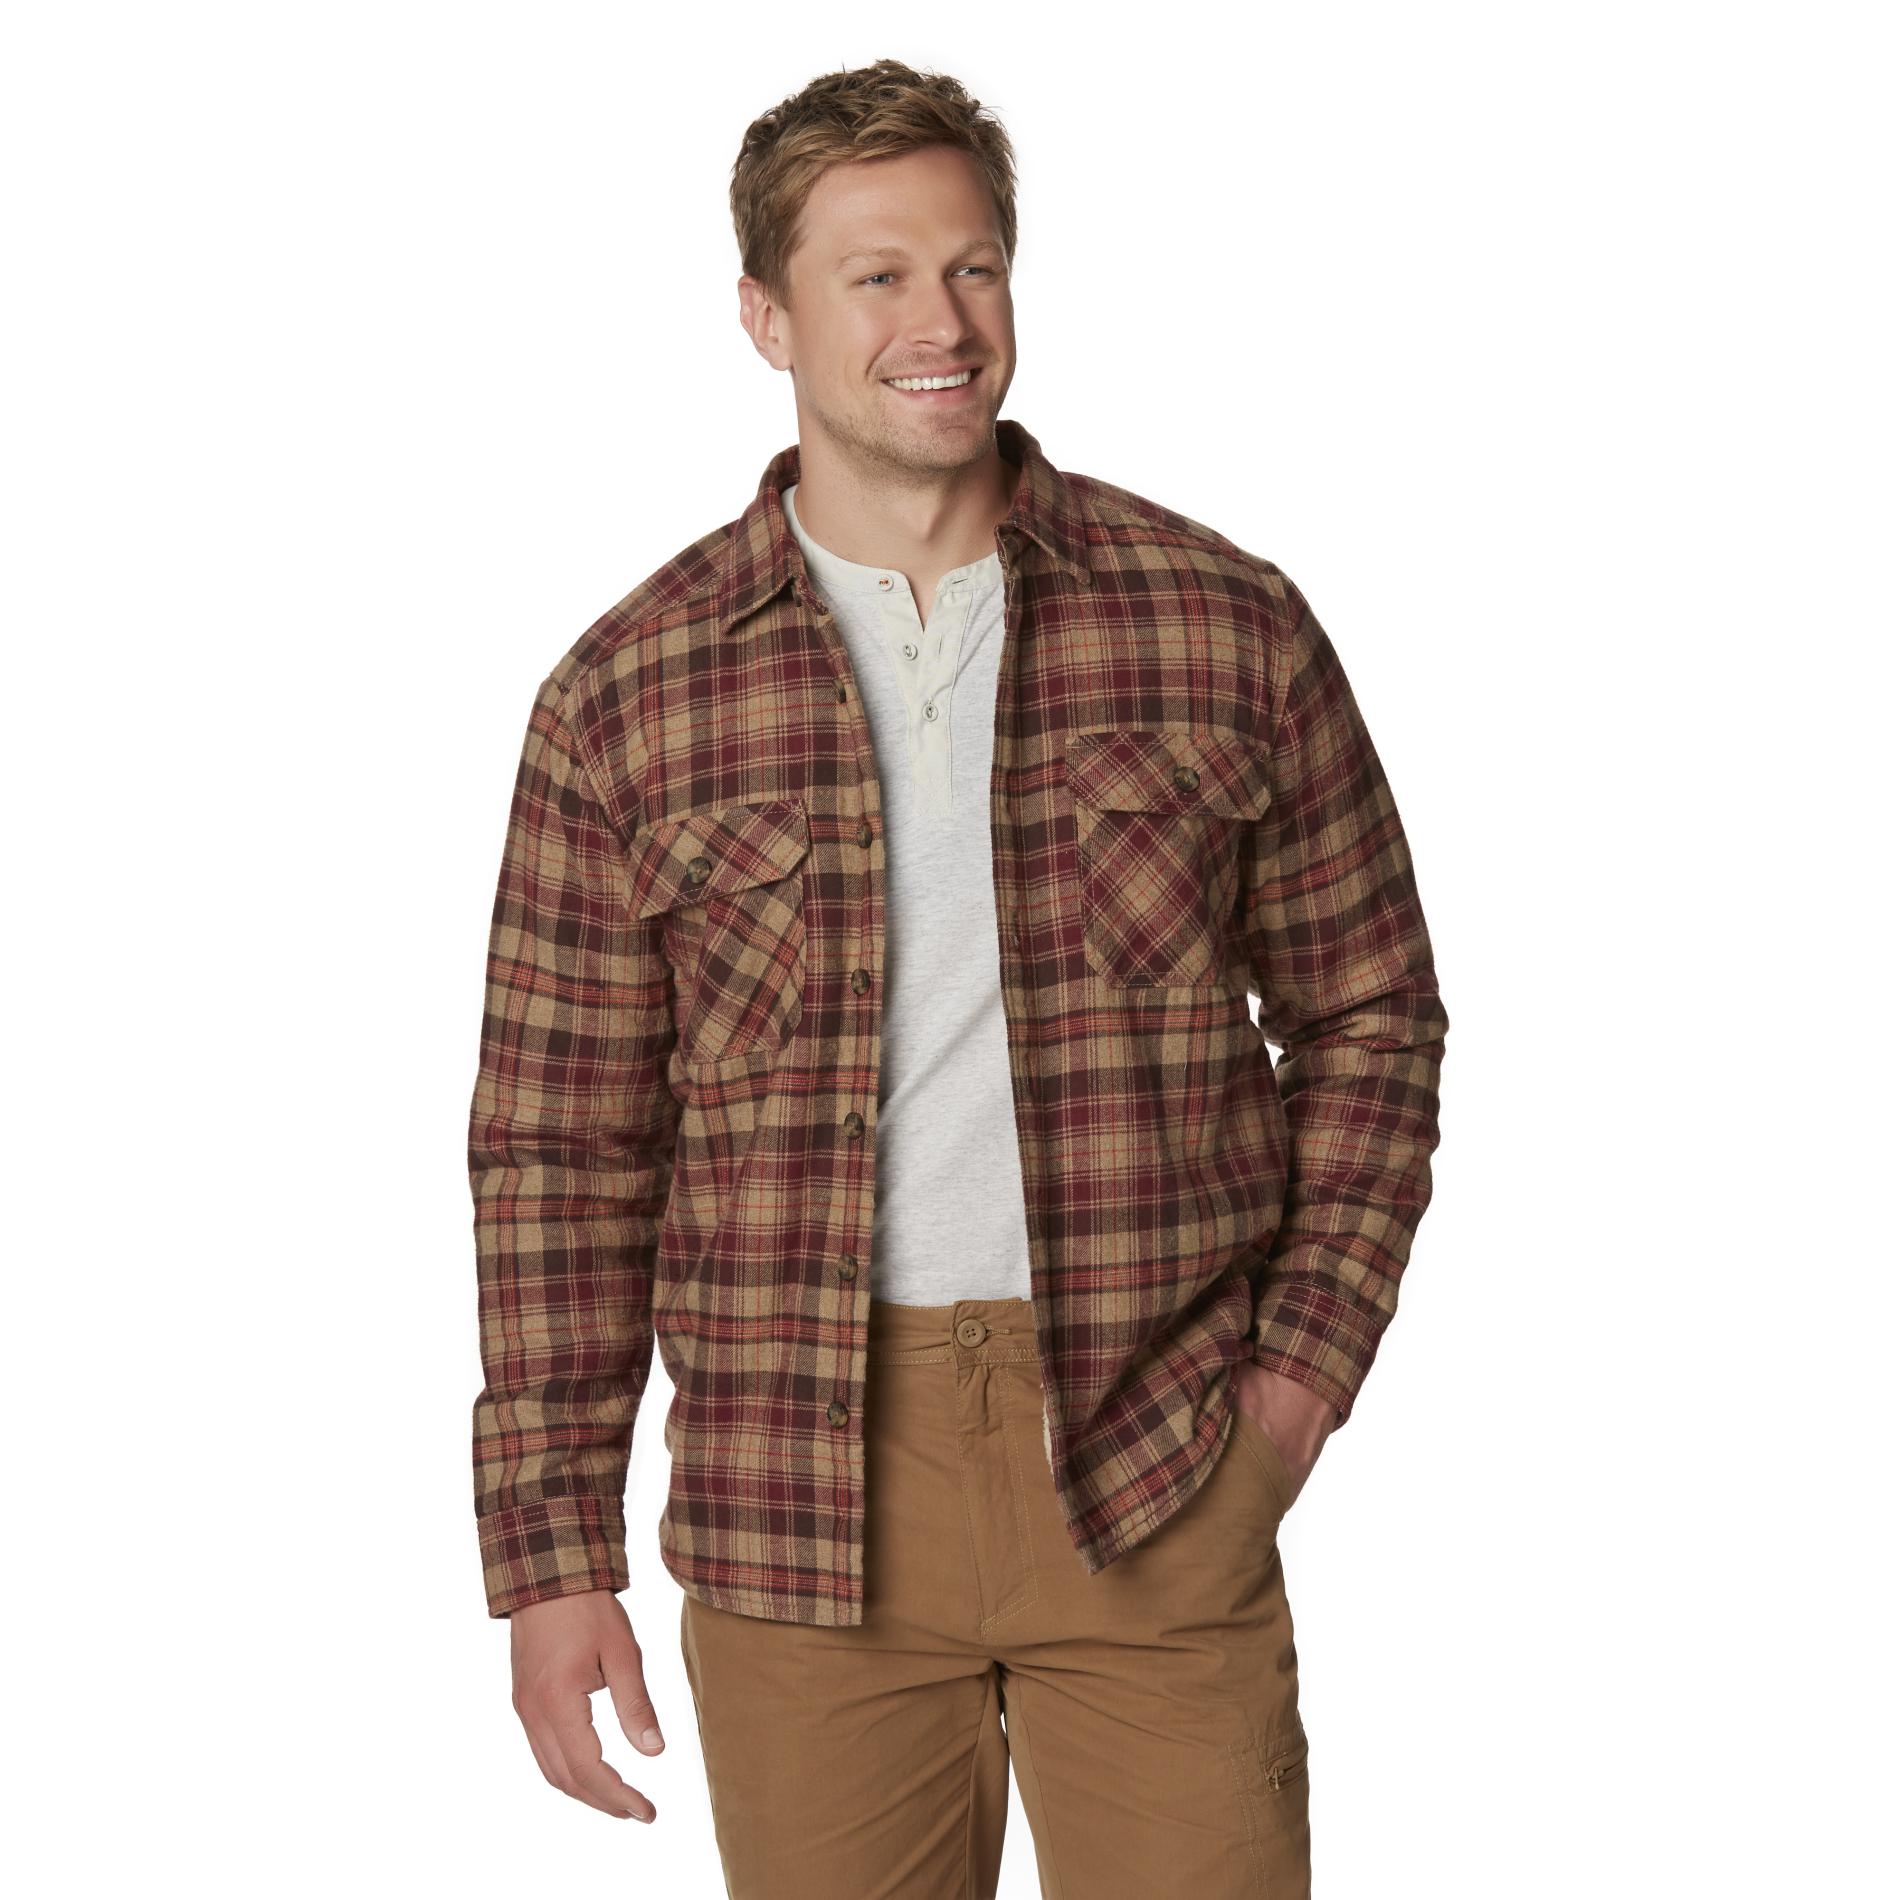 Outdoor Life Men's Flannel Shirt Jacket - Plaid